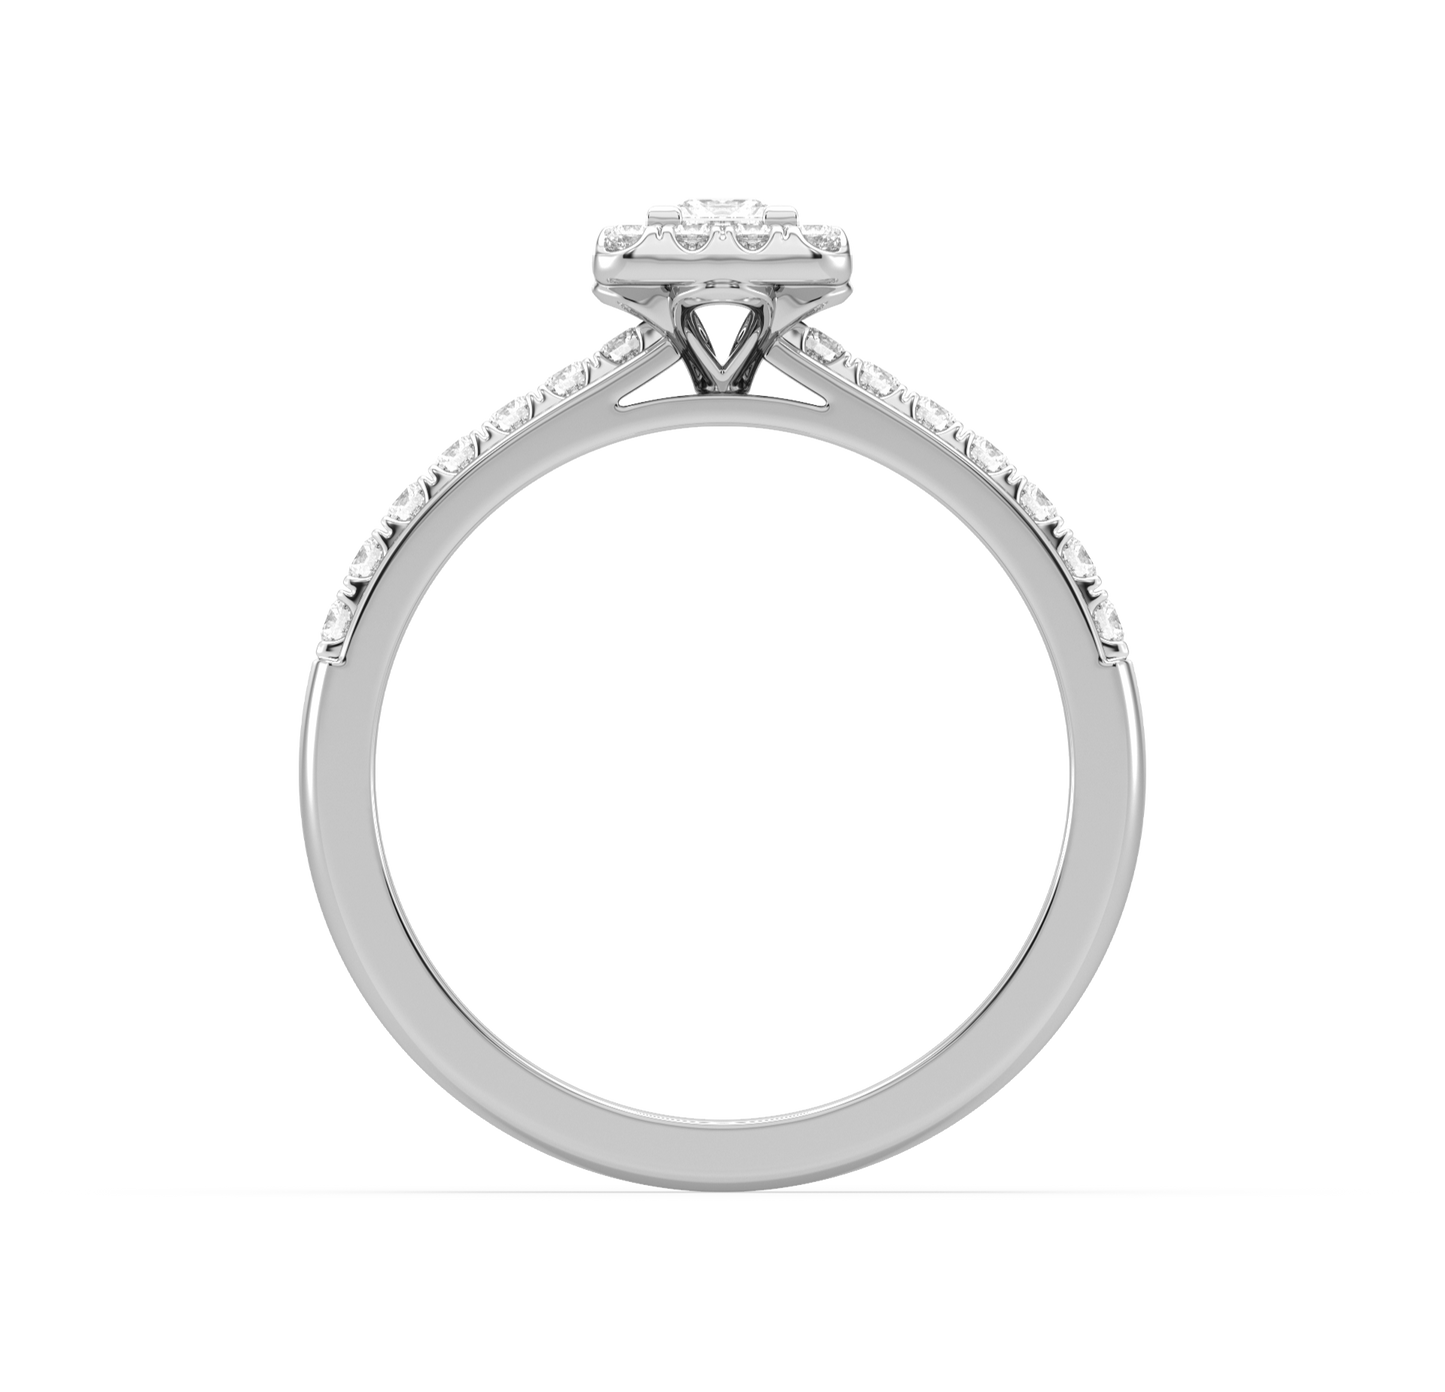 Customised ring RG21007-PH21013